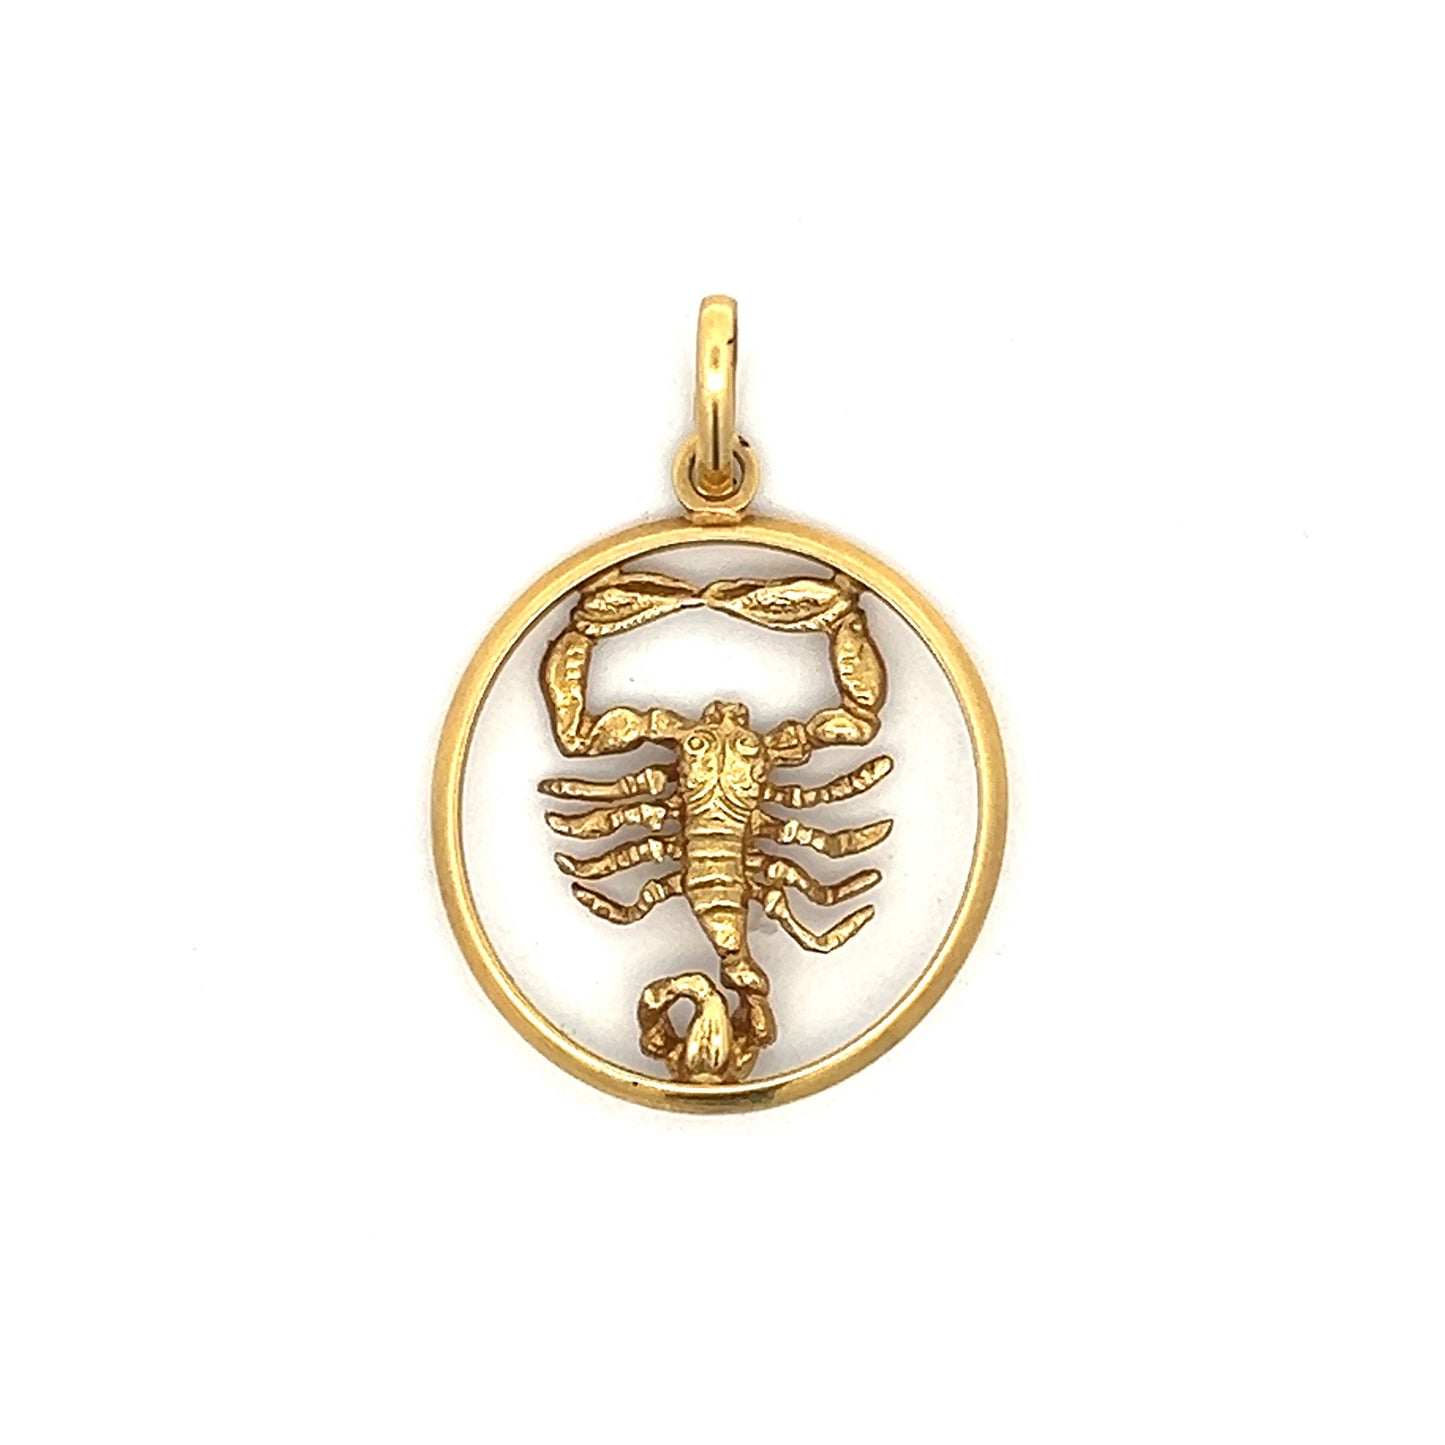 Vintage Scorpio Necklace Pendant in Yellow Gold